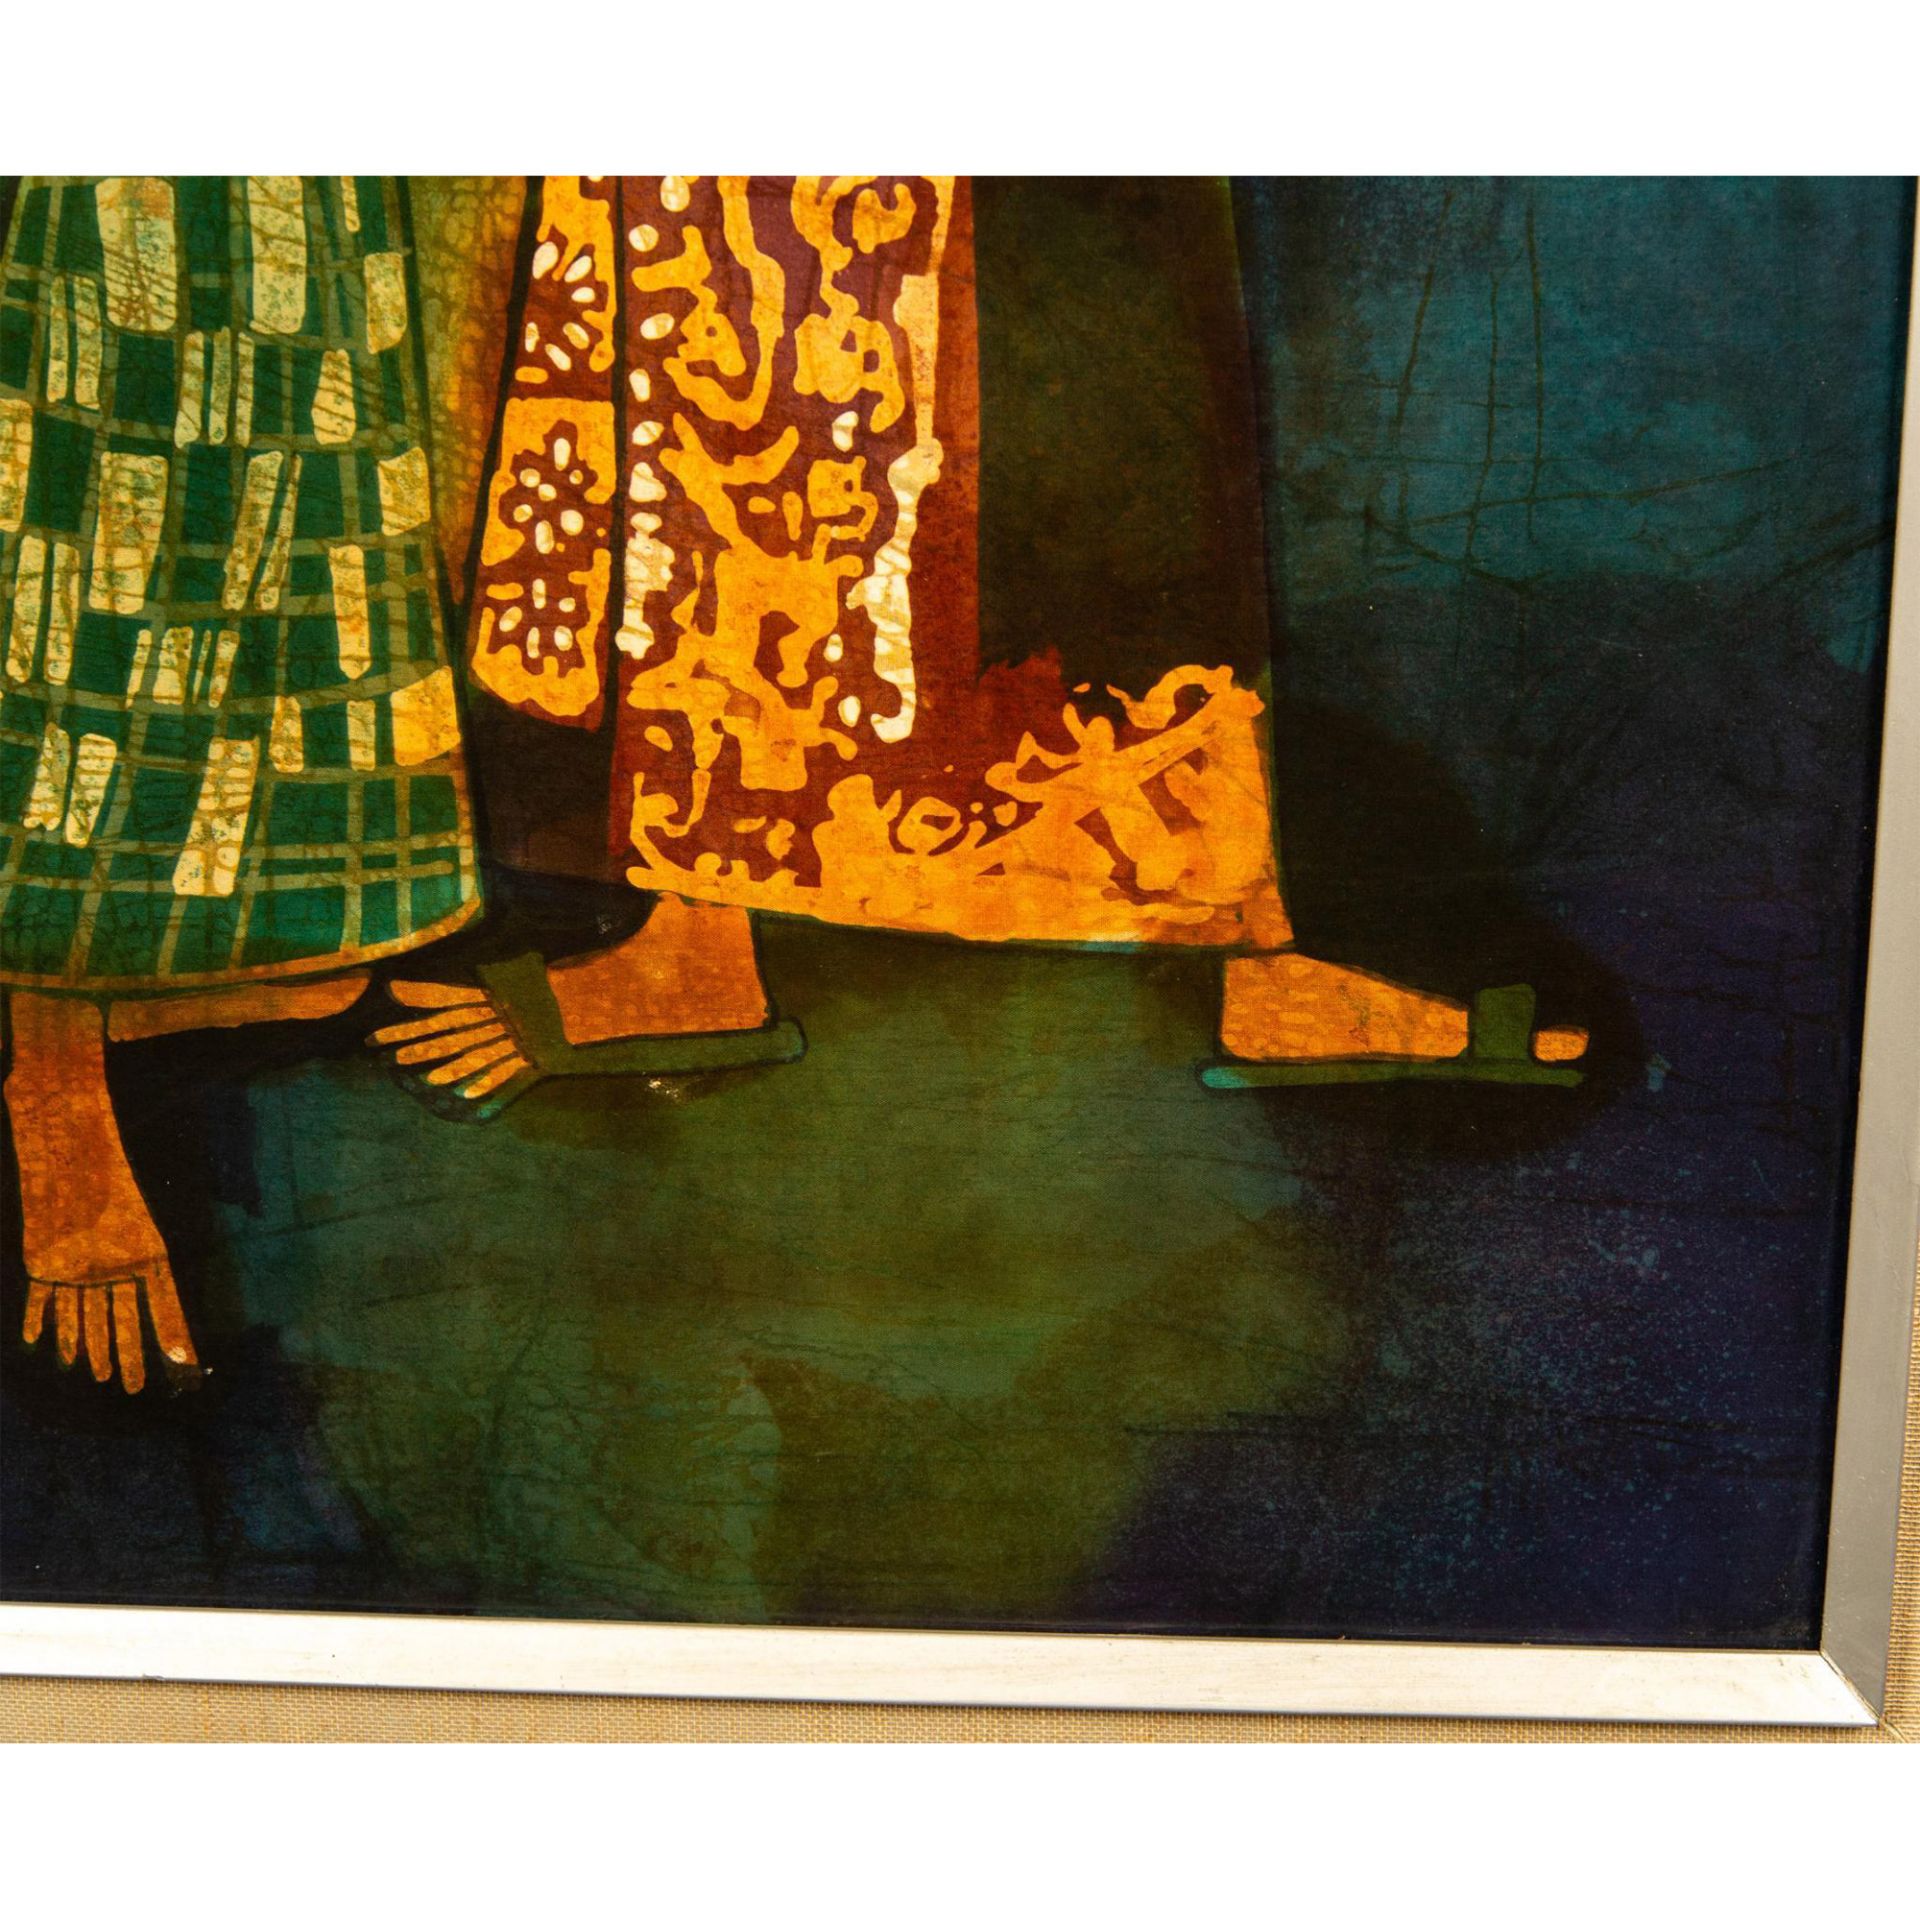 Large Artwork on Linen Board, Eastern Mediterranean Figures - Image 3 of 5